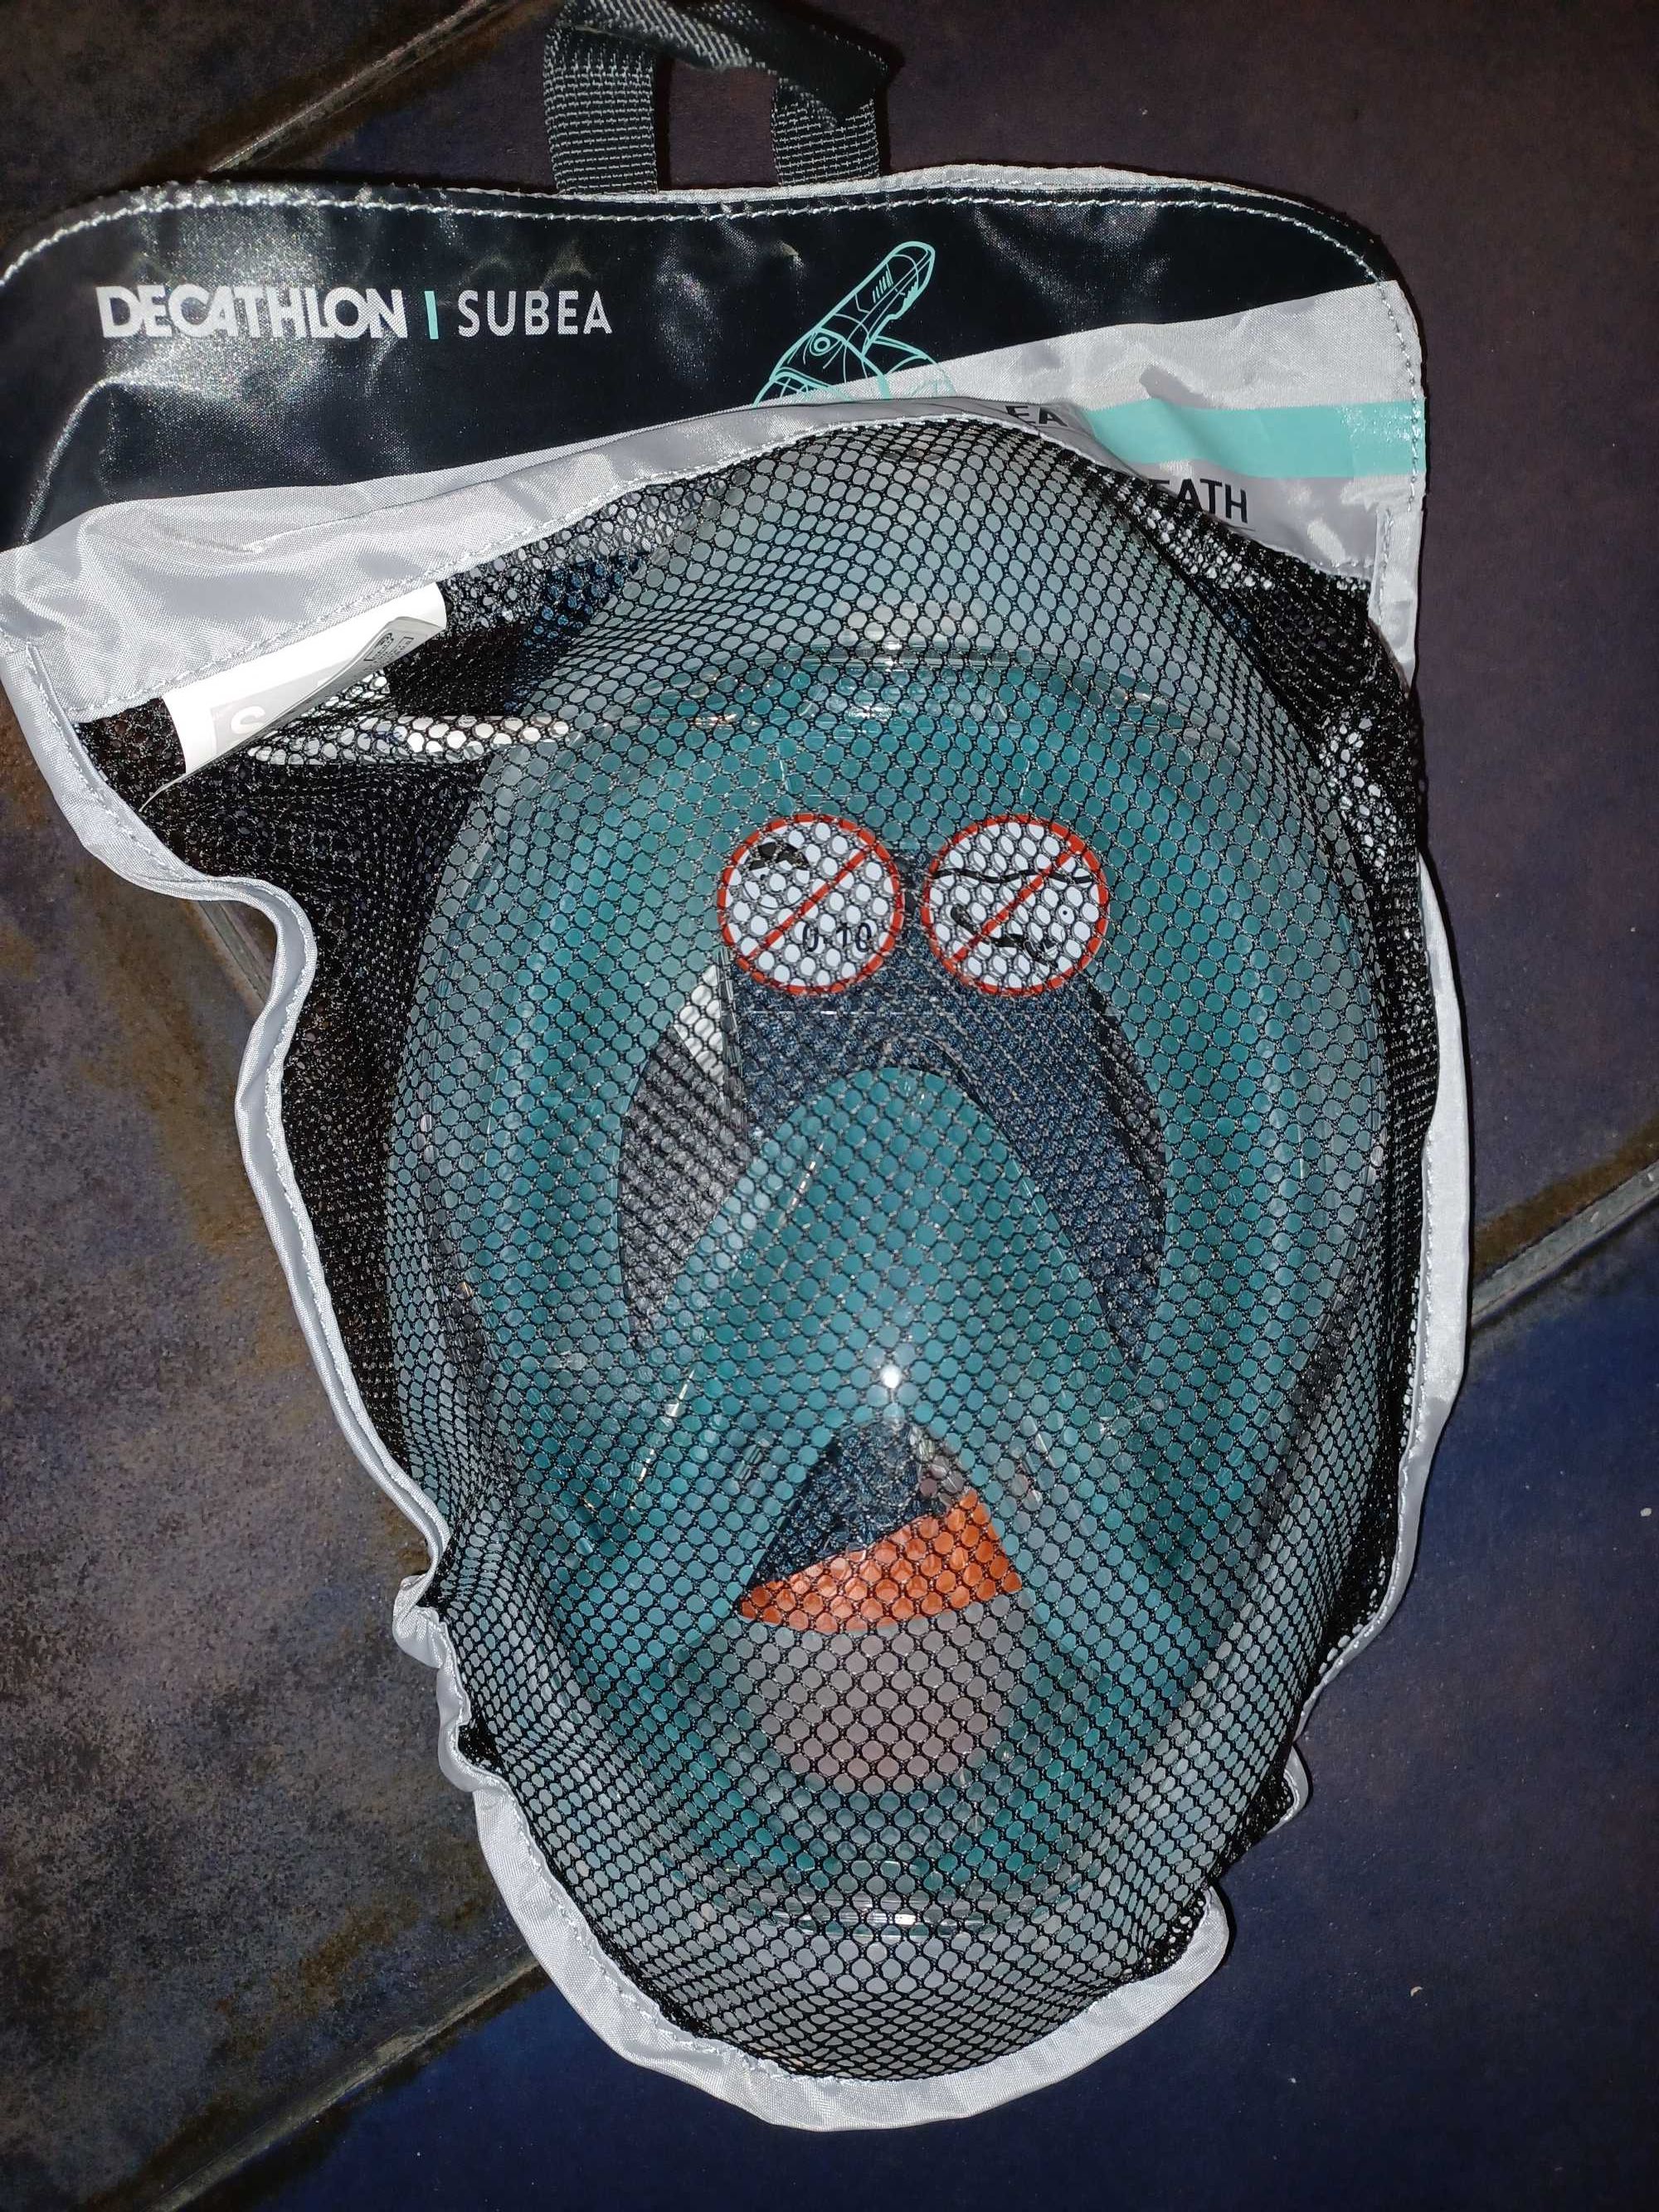 Maska do snorkelingu Subea Easybreath 500 zielona. Rozmiar S - M. Nowa